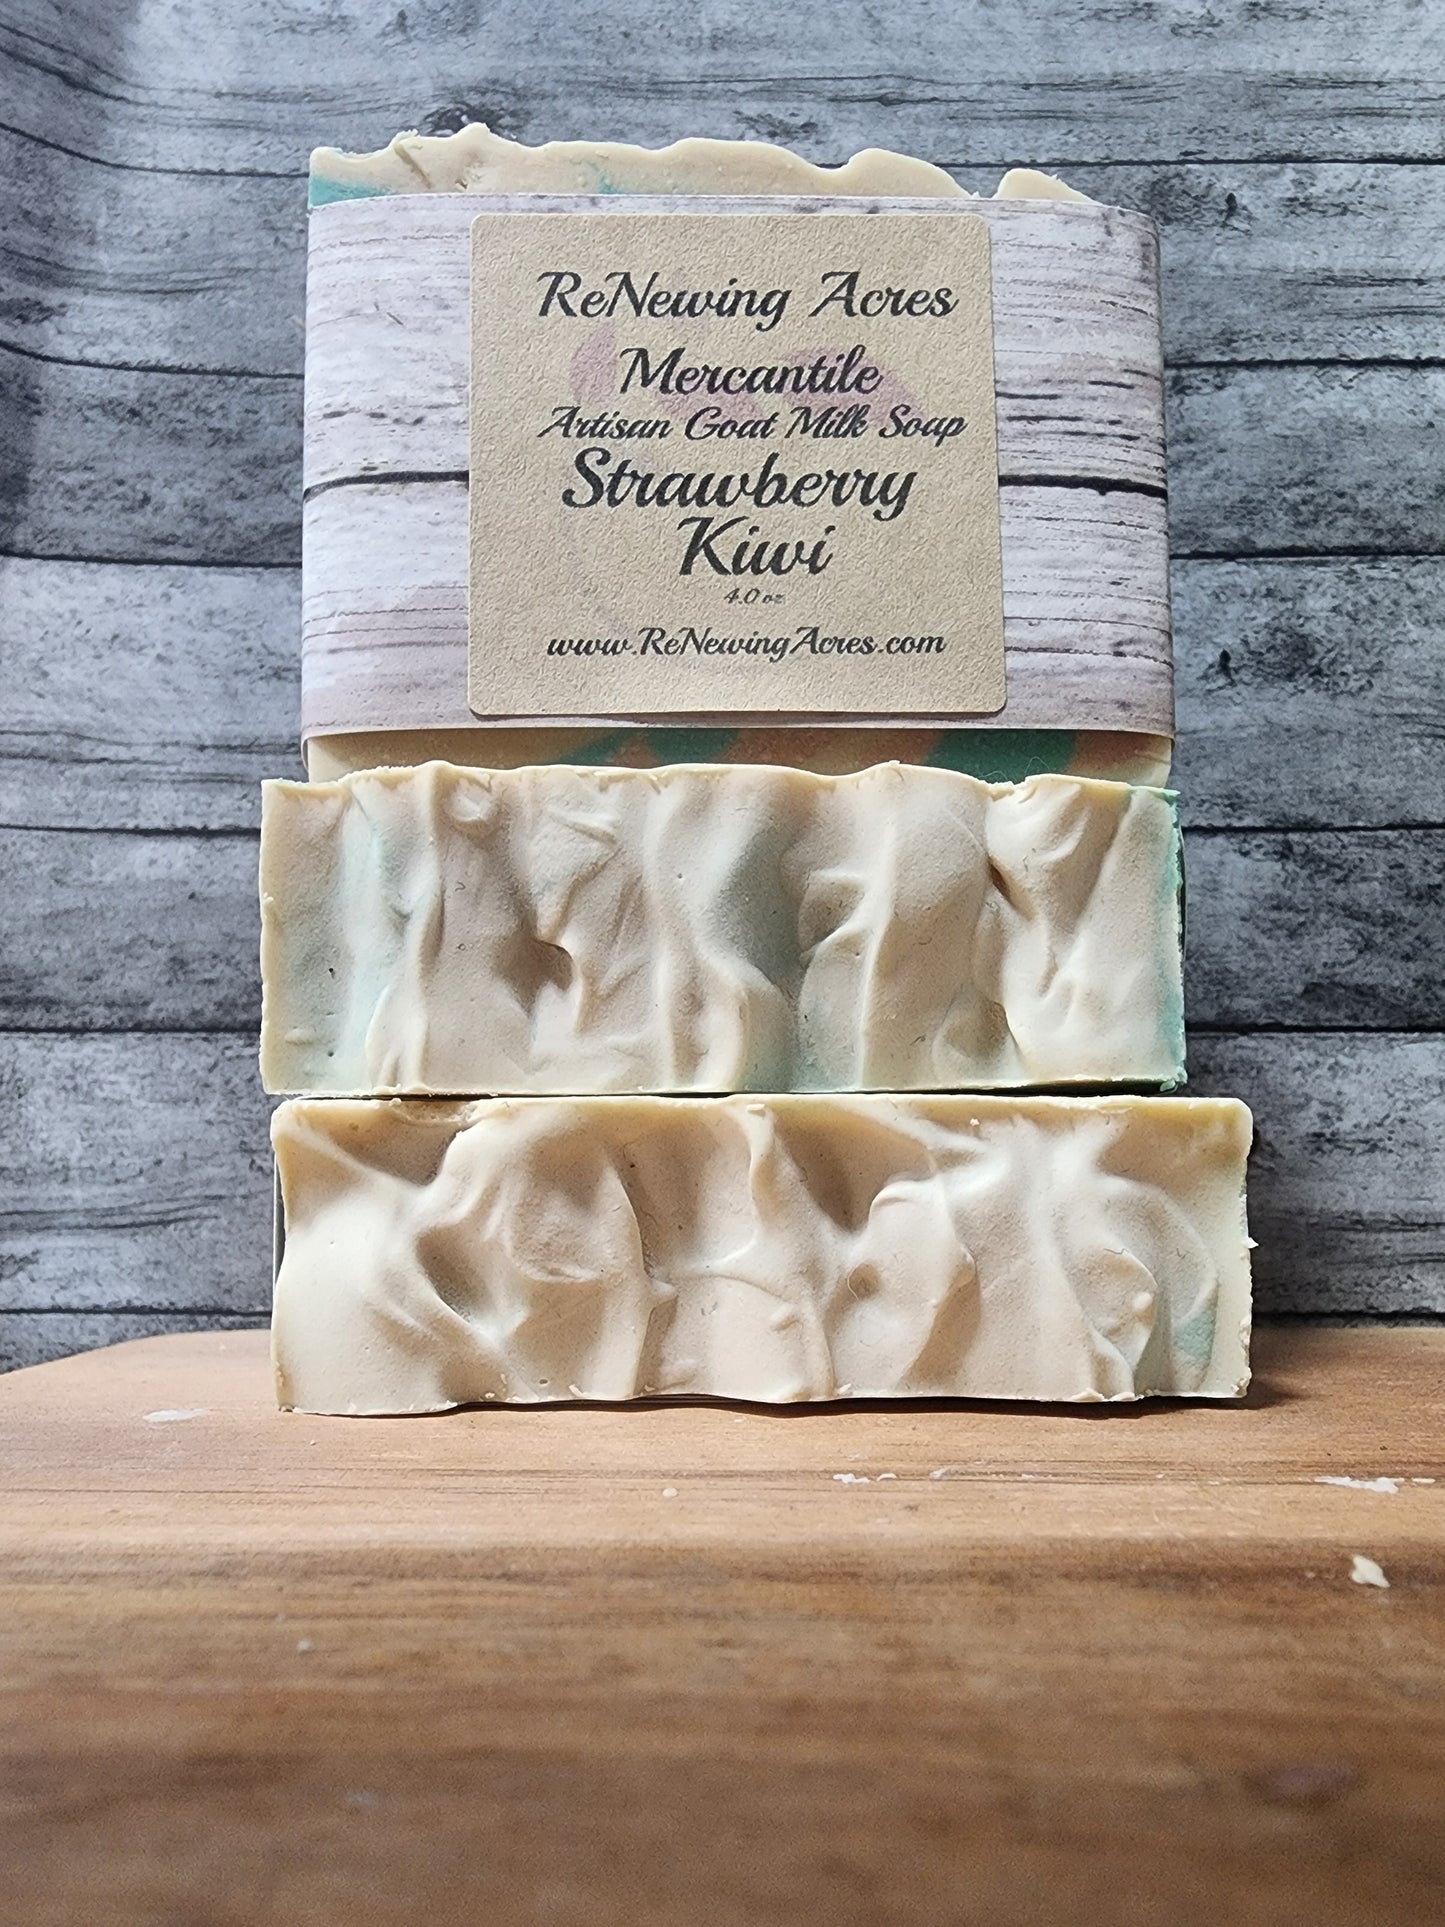 Kiwi Strawberry Goat Milk Artisan Soap